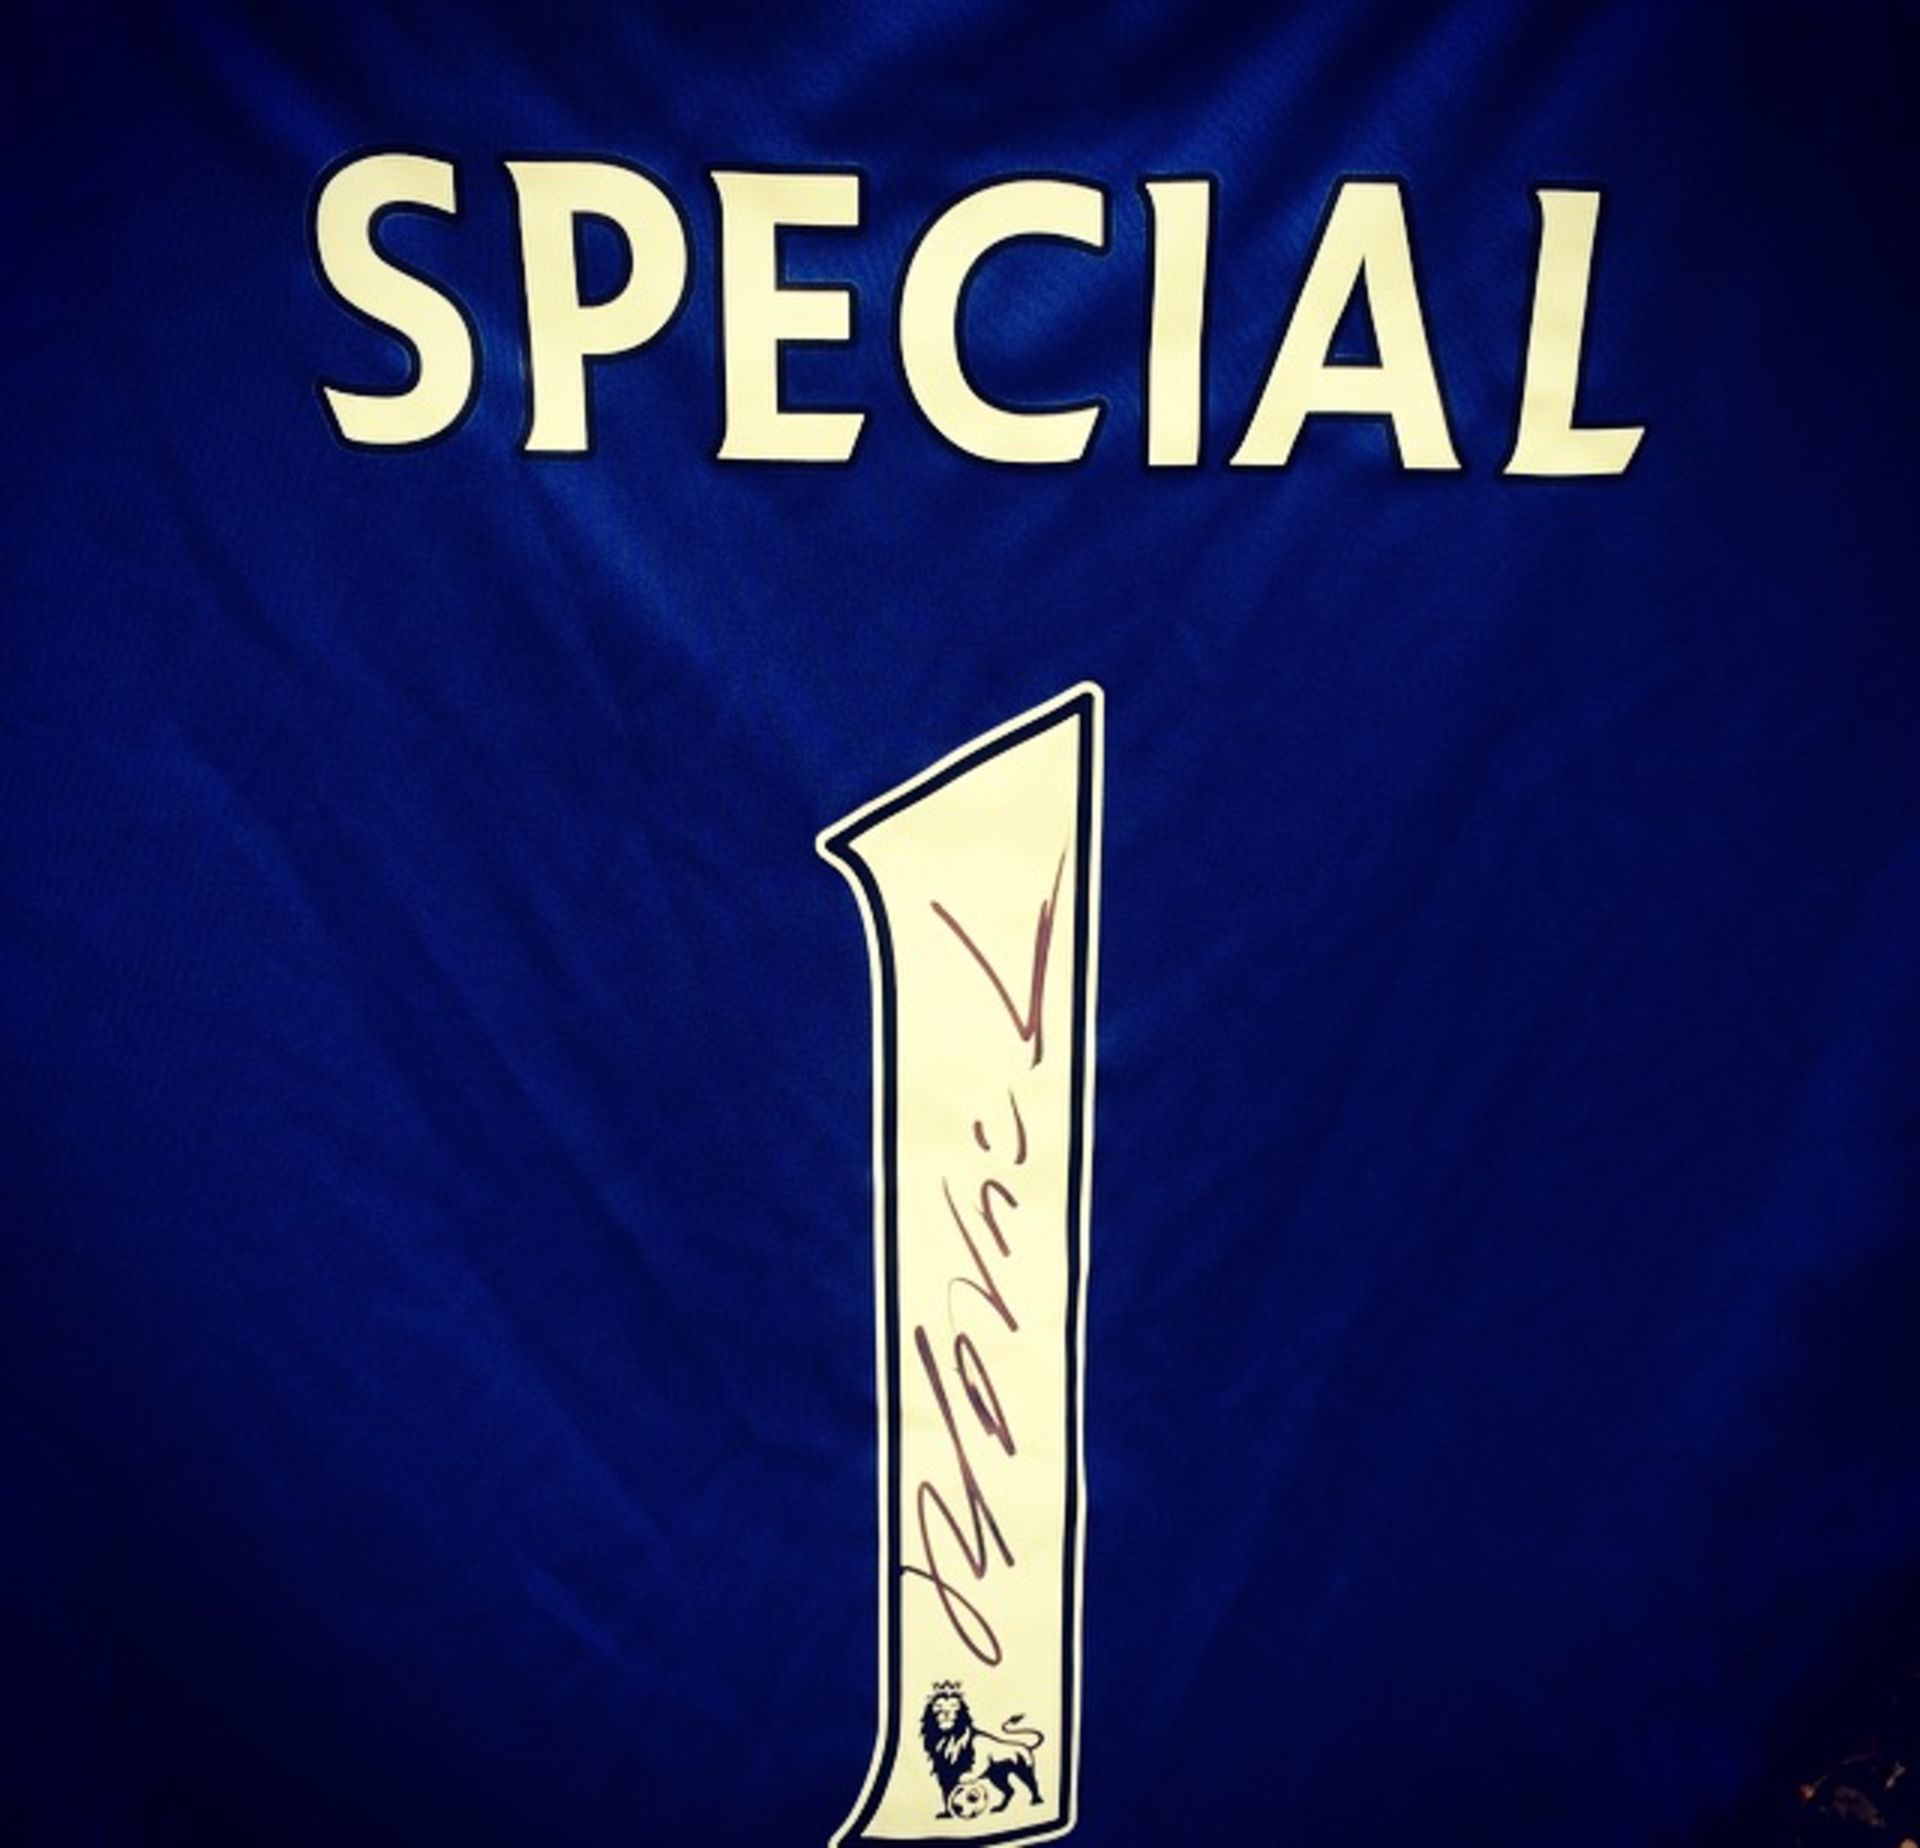 Jose Mourinho Personally Donates His One-off Signed Shirt - Image 3 of 3